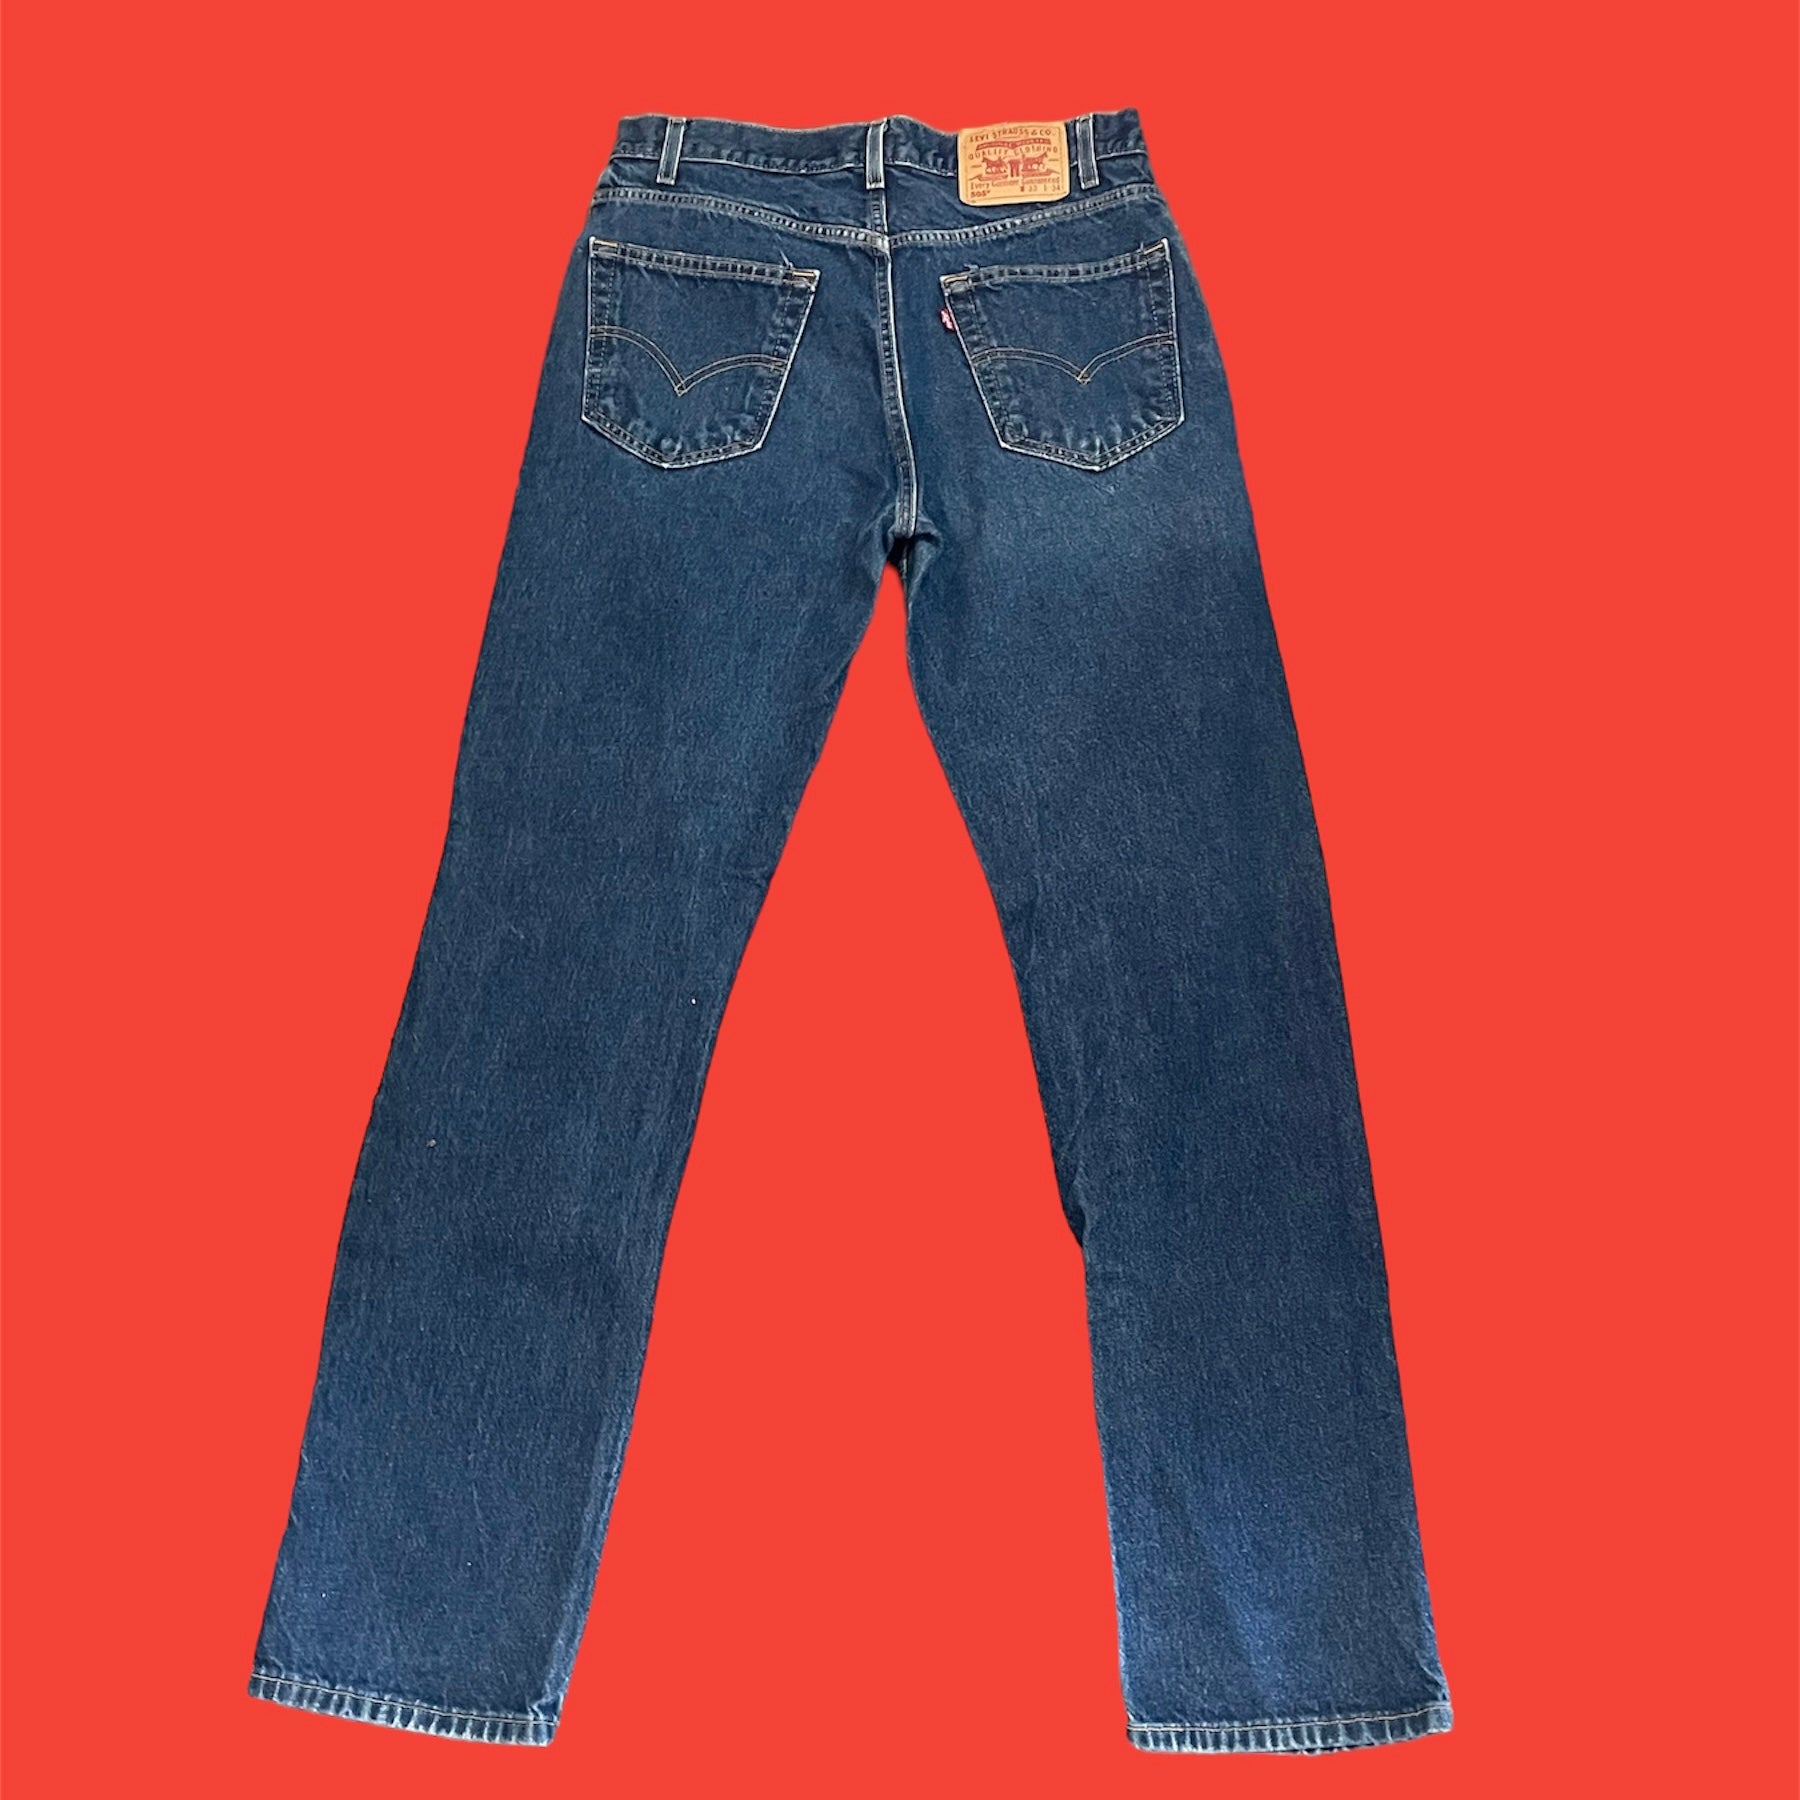 Levi’s 505 Dark Wash Denim Jeans 33 X 34